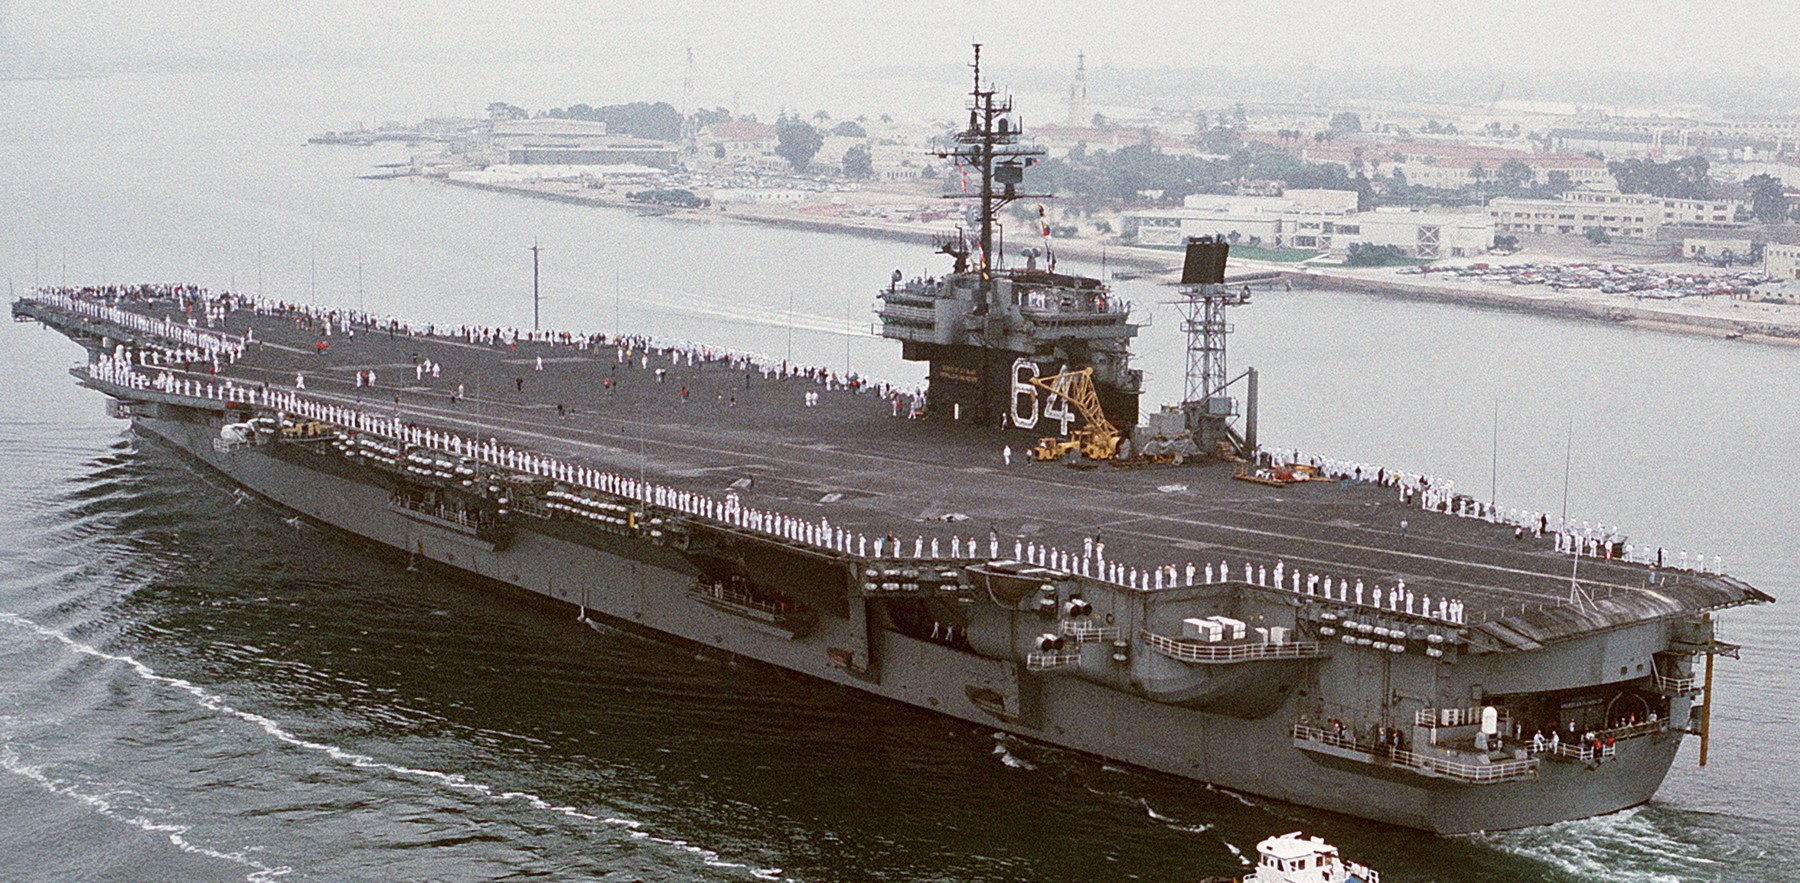 cv-64 uss constellation kitty hawk class aircraft carrier us navy returning nas north island 1989 98